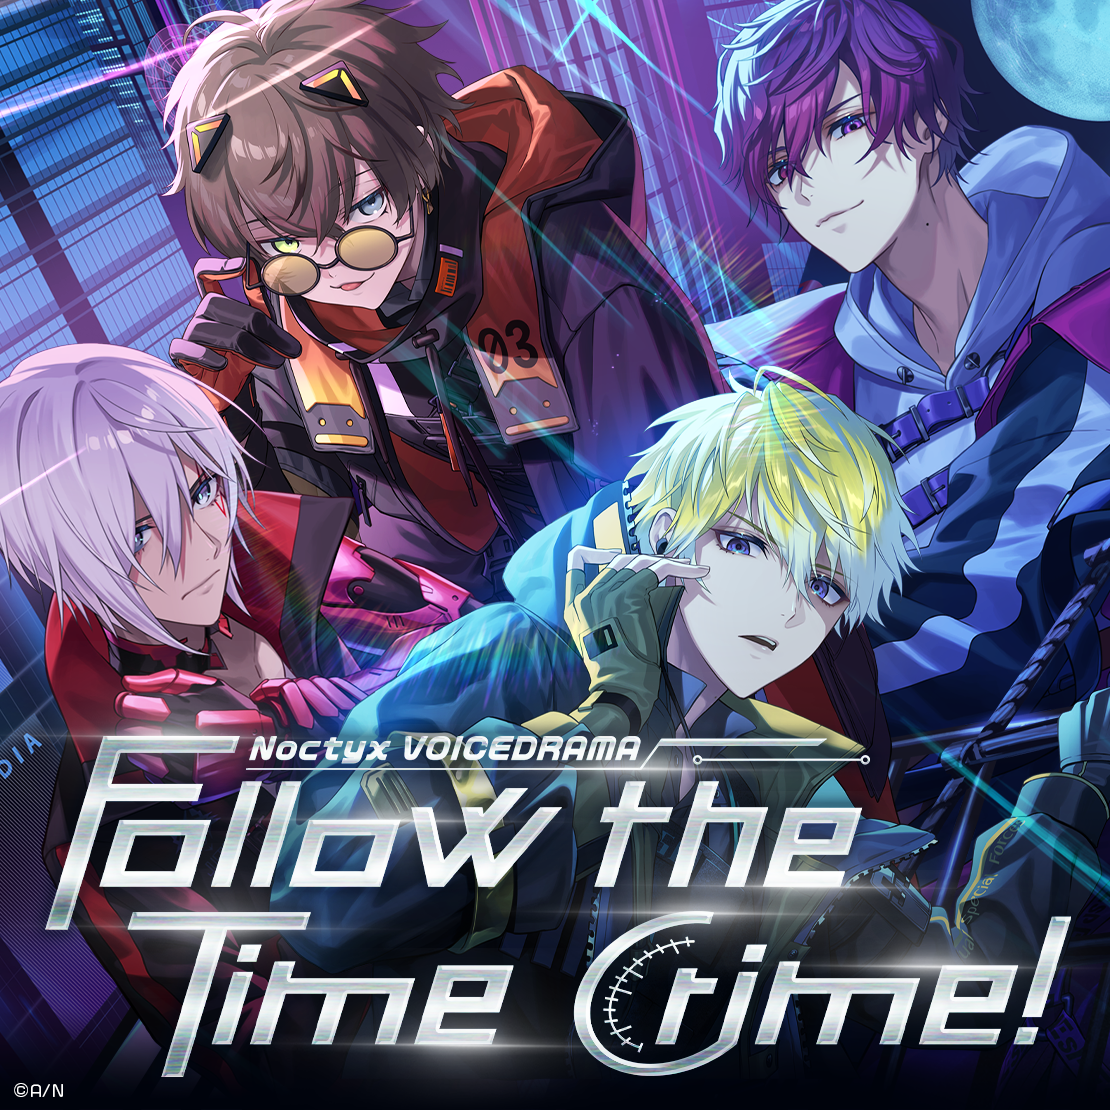  [pre-order] Nijisanji Noctyx Voice Drama -Follow the Time Crime!